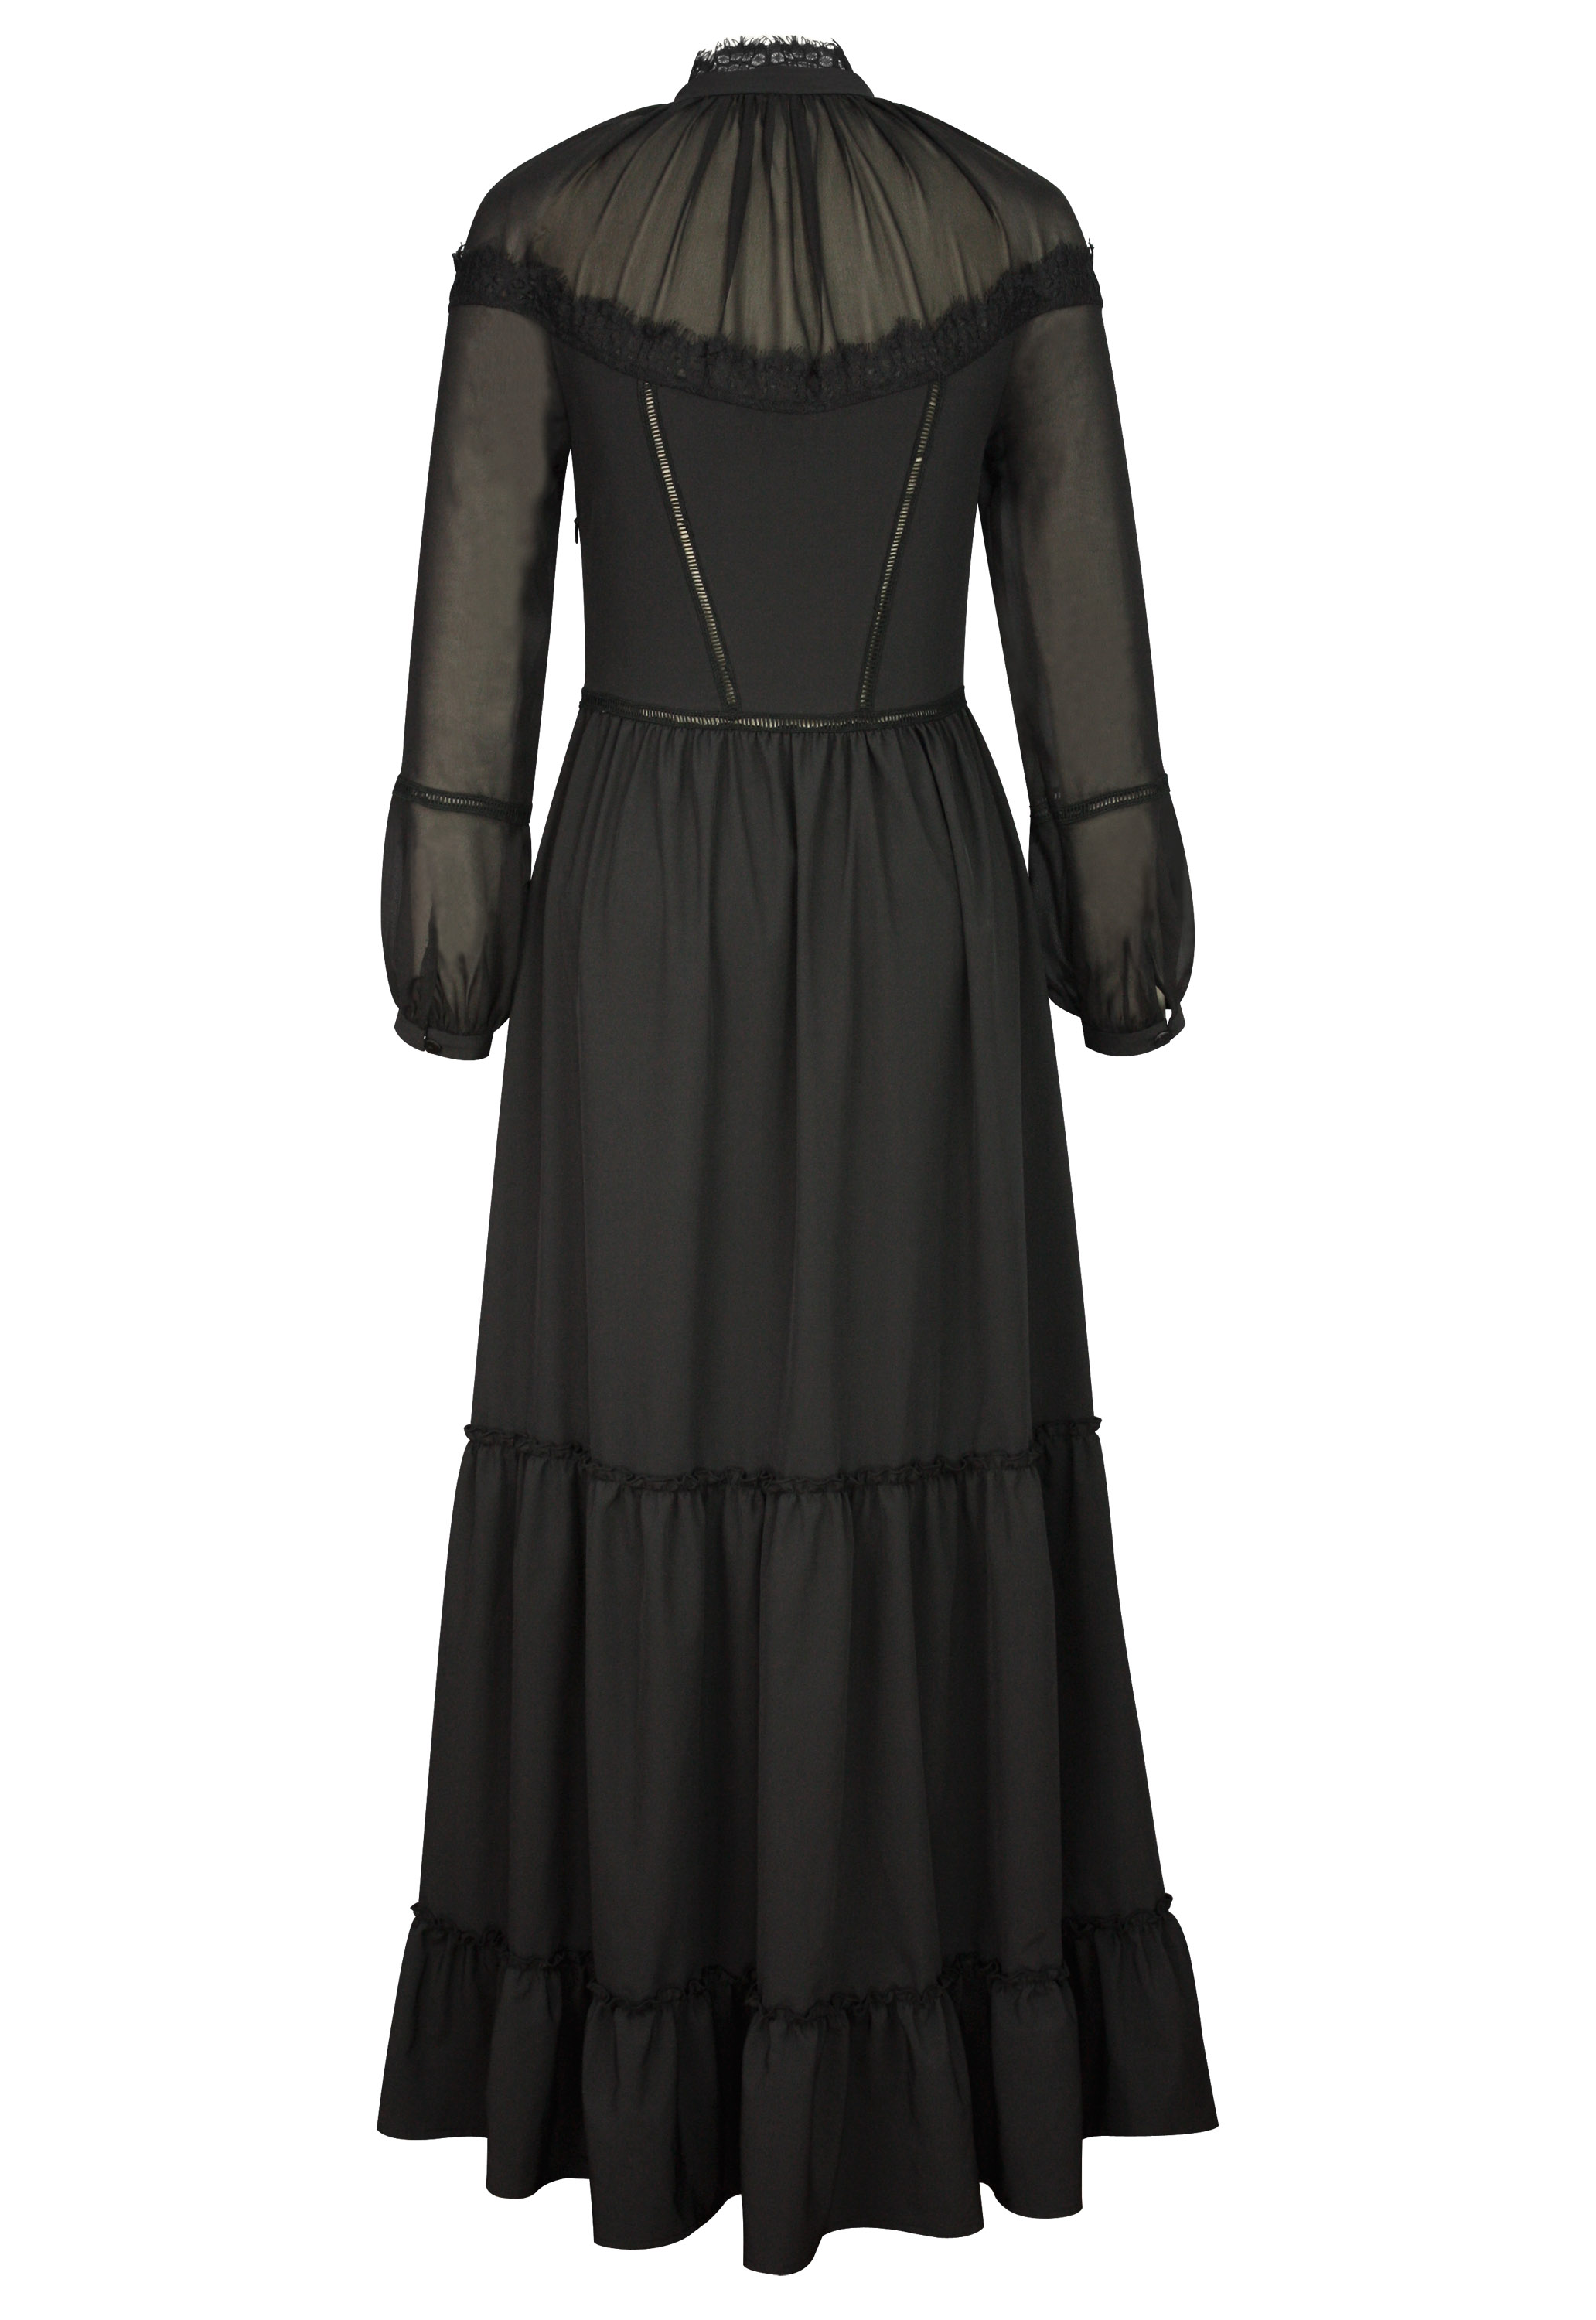 Victorian Maxi Dress